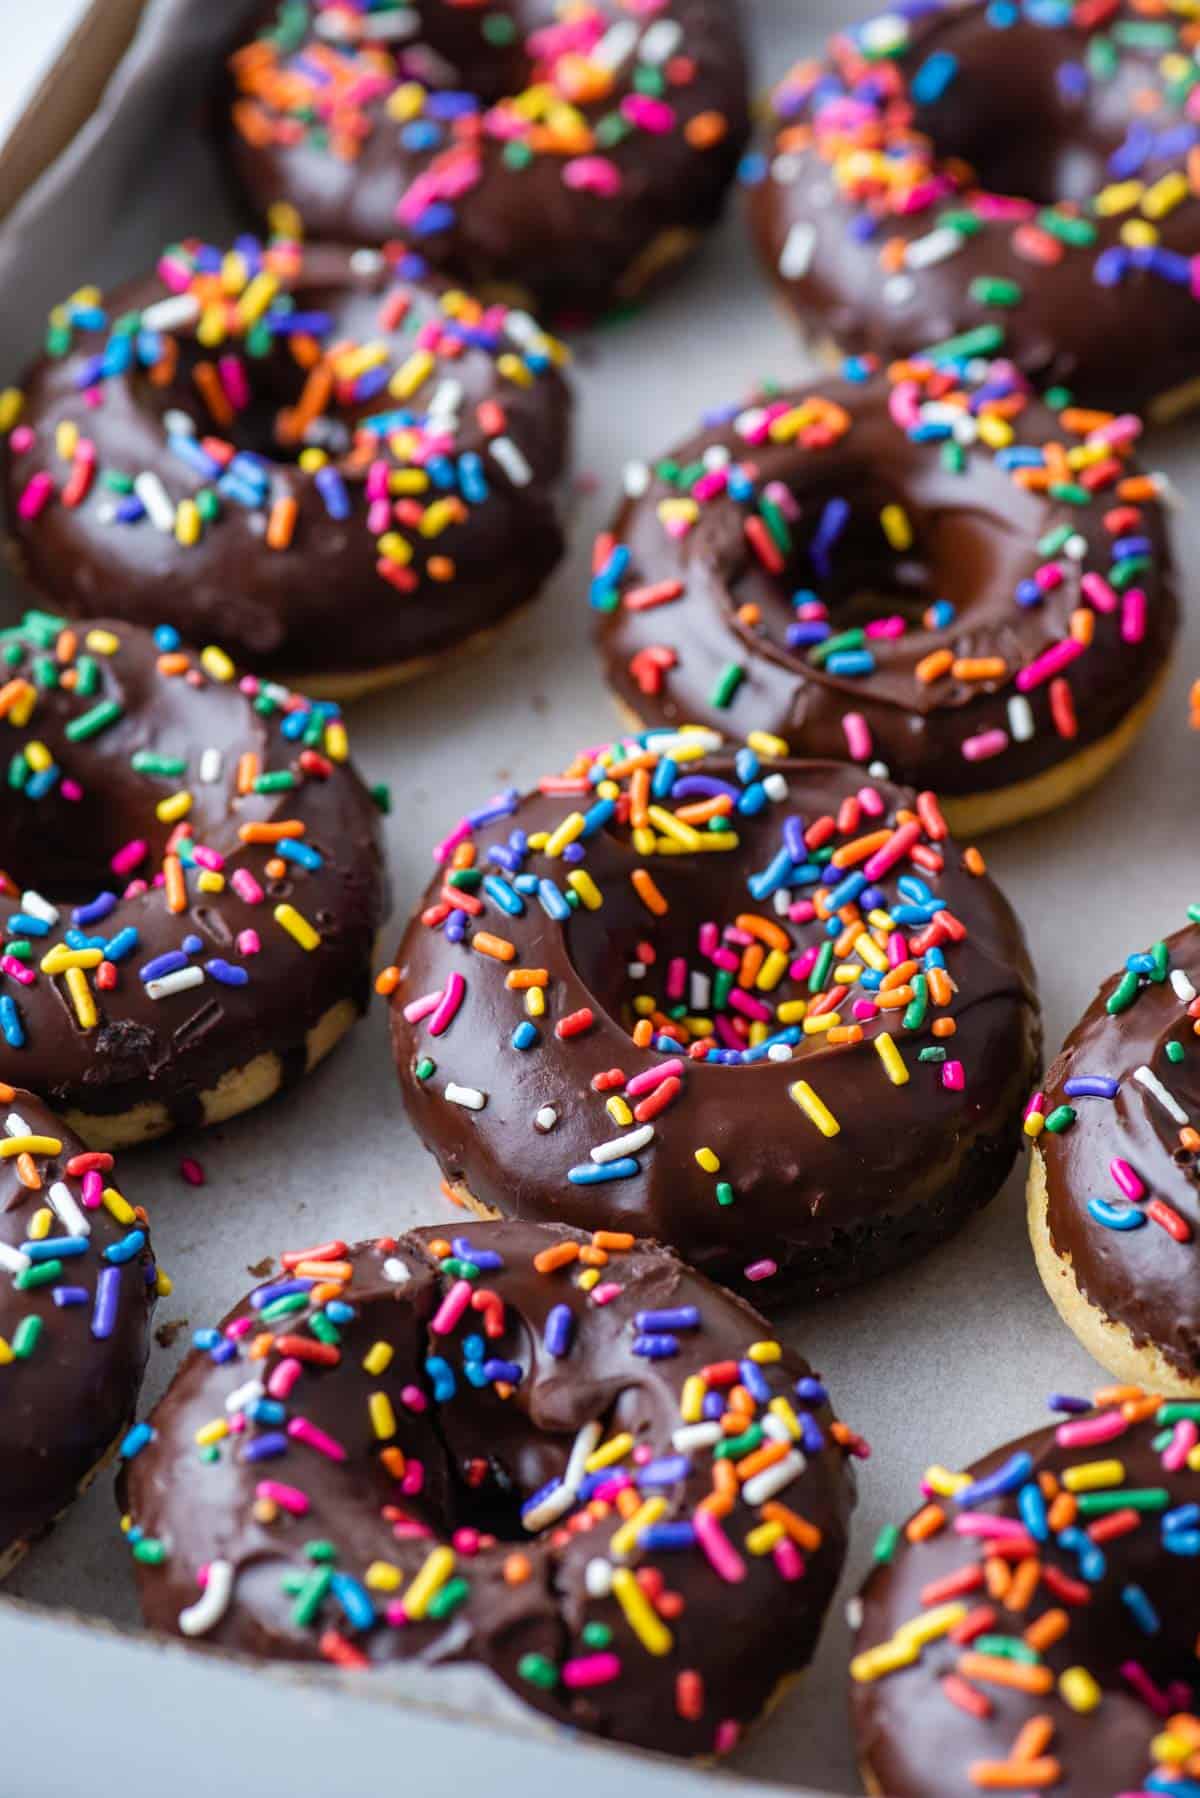 Gluten free chocolate glazed donuts on a baking sheet